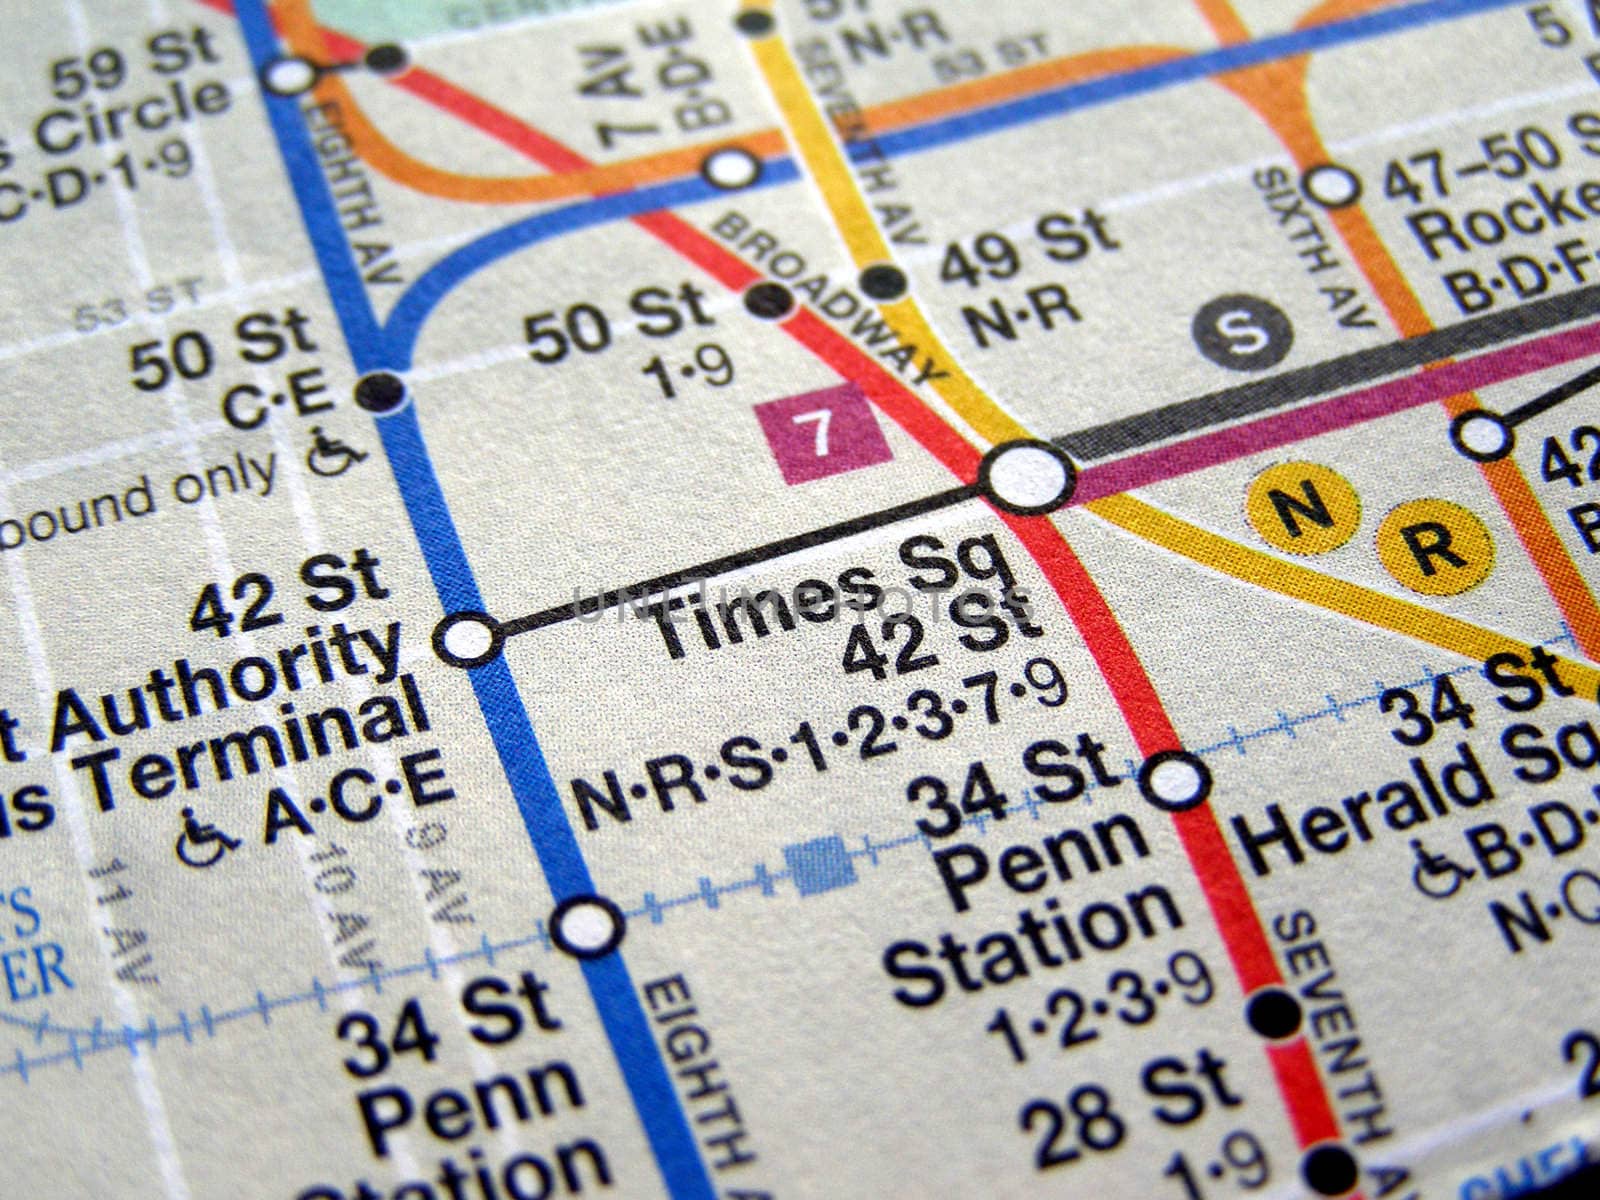 New York subway map by claudiodivizia